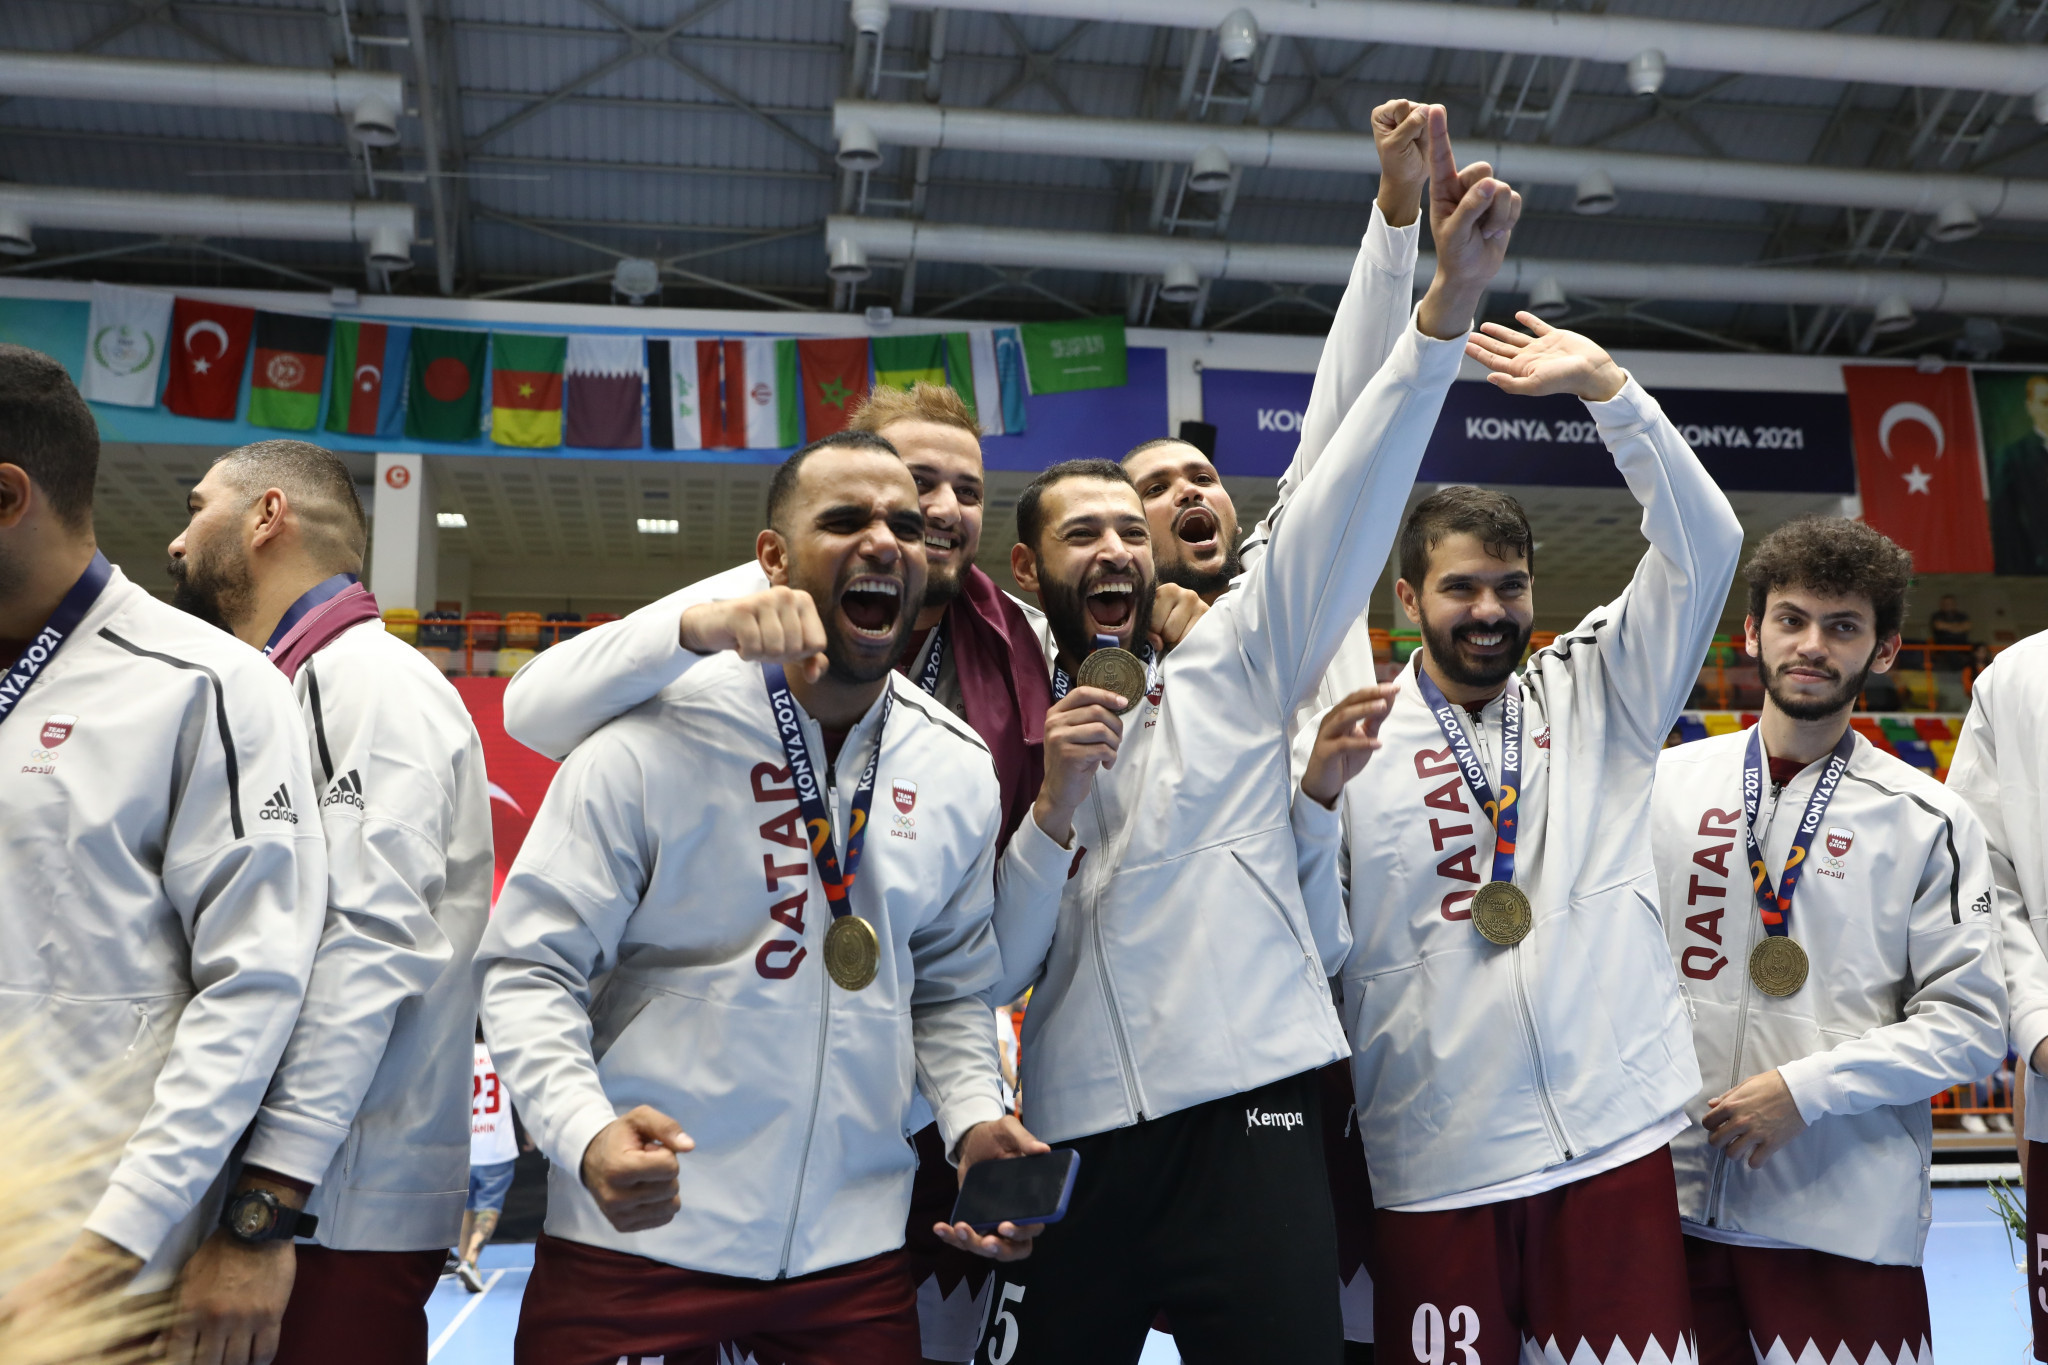 Qatar players celebrate after beating Turkey to win men's handball gold in Konya ©Konya 2021